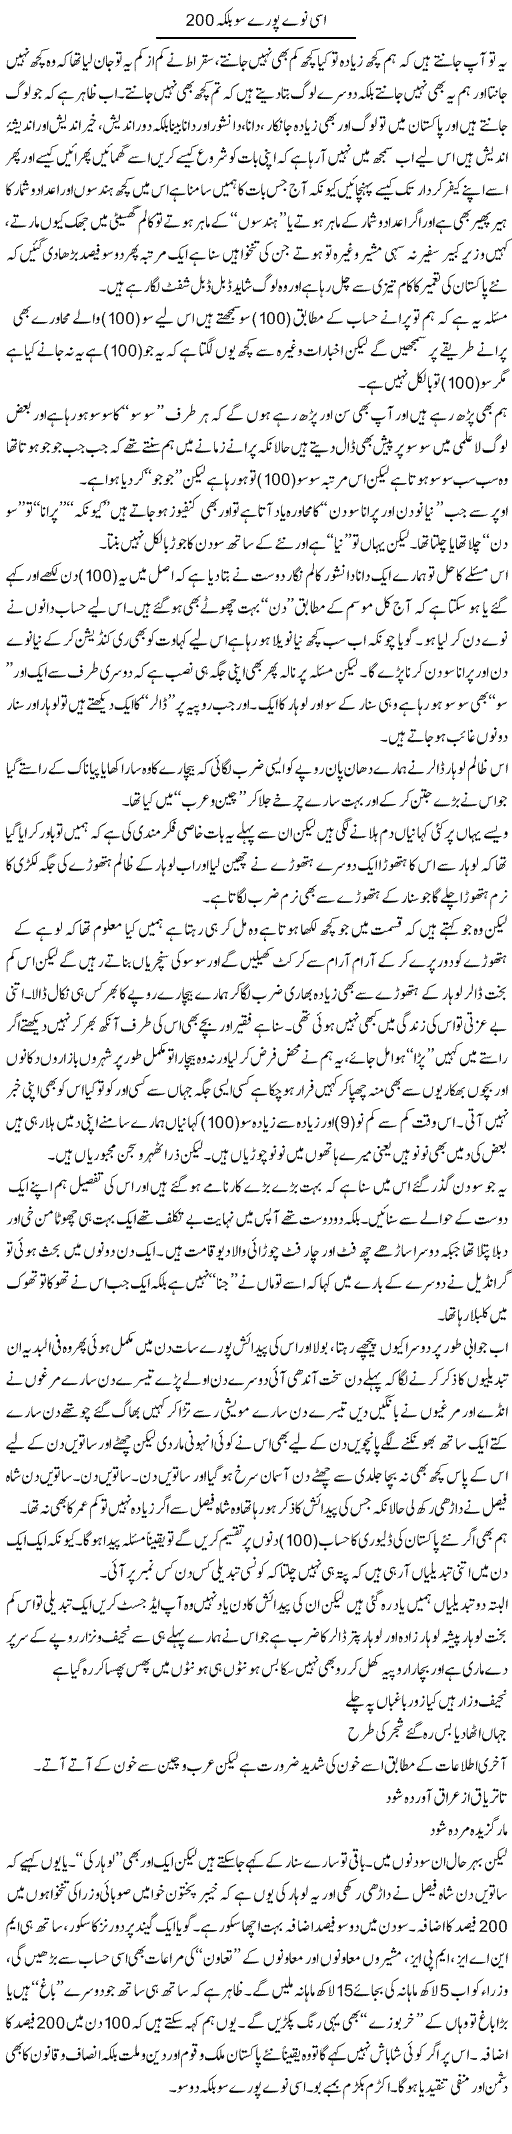 Isi Nawway Poore So Balkay 200 | Saad Ullah Jan Barq | Daily Urdu Columns